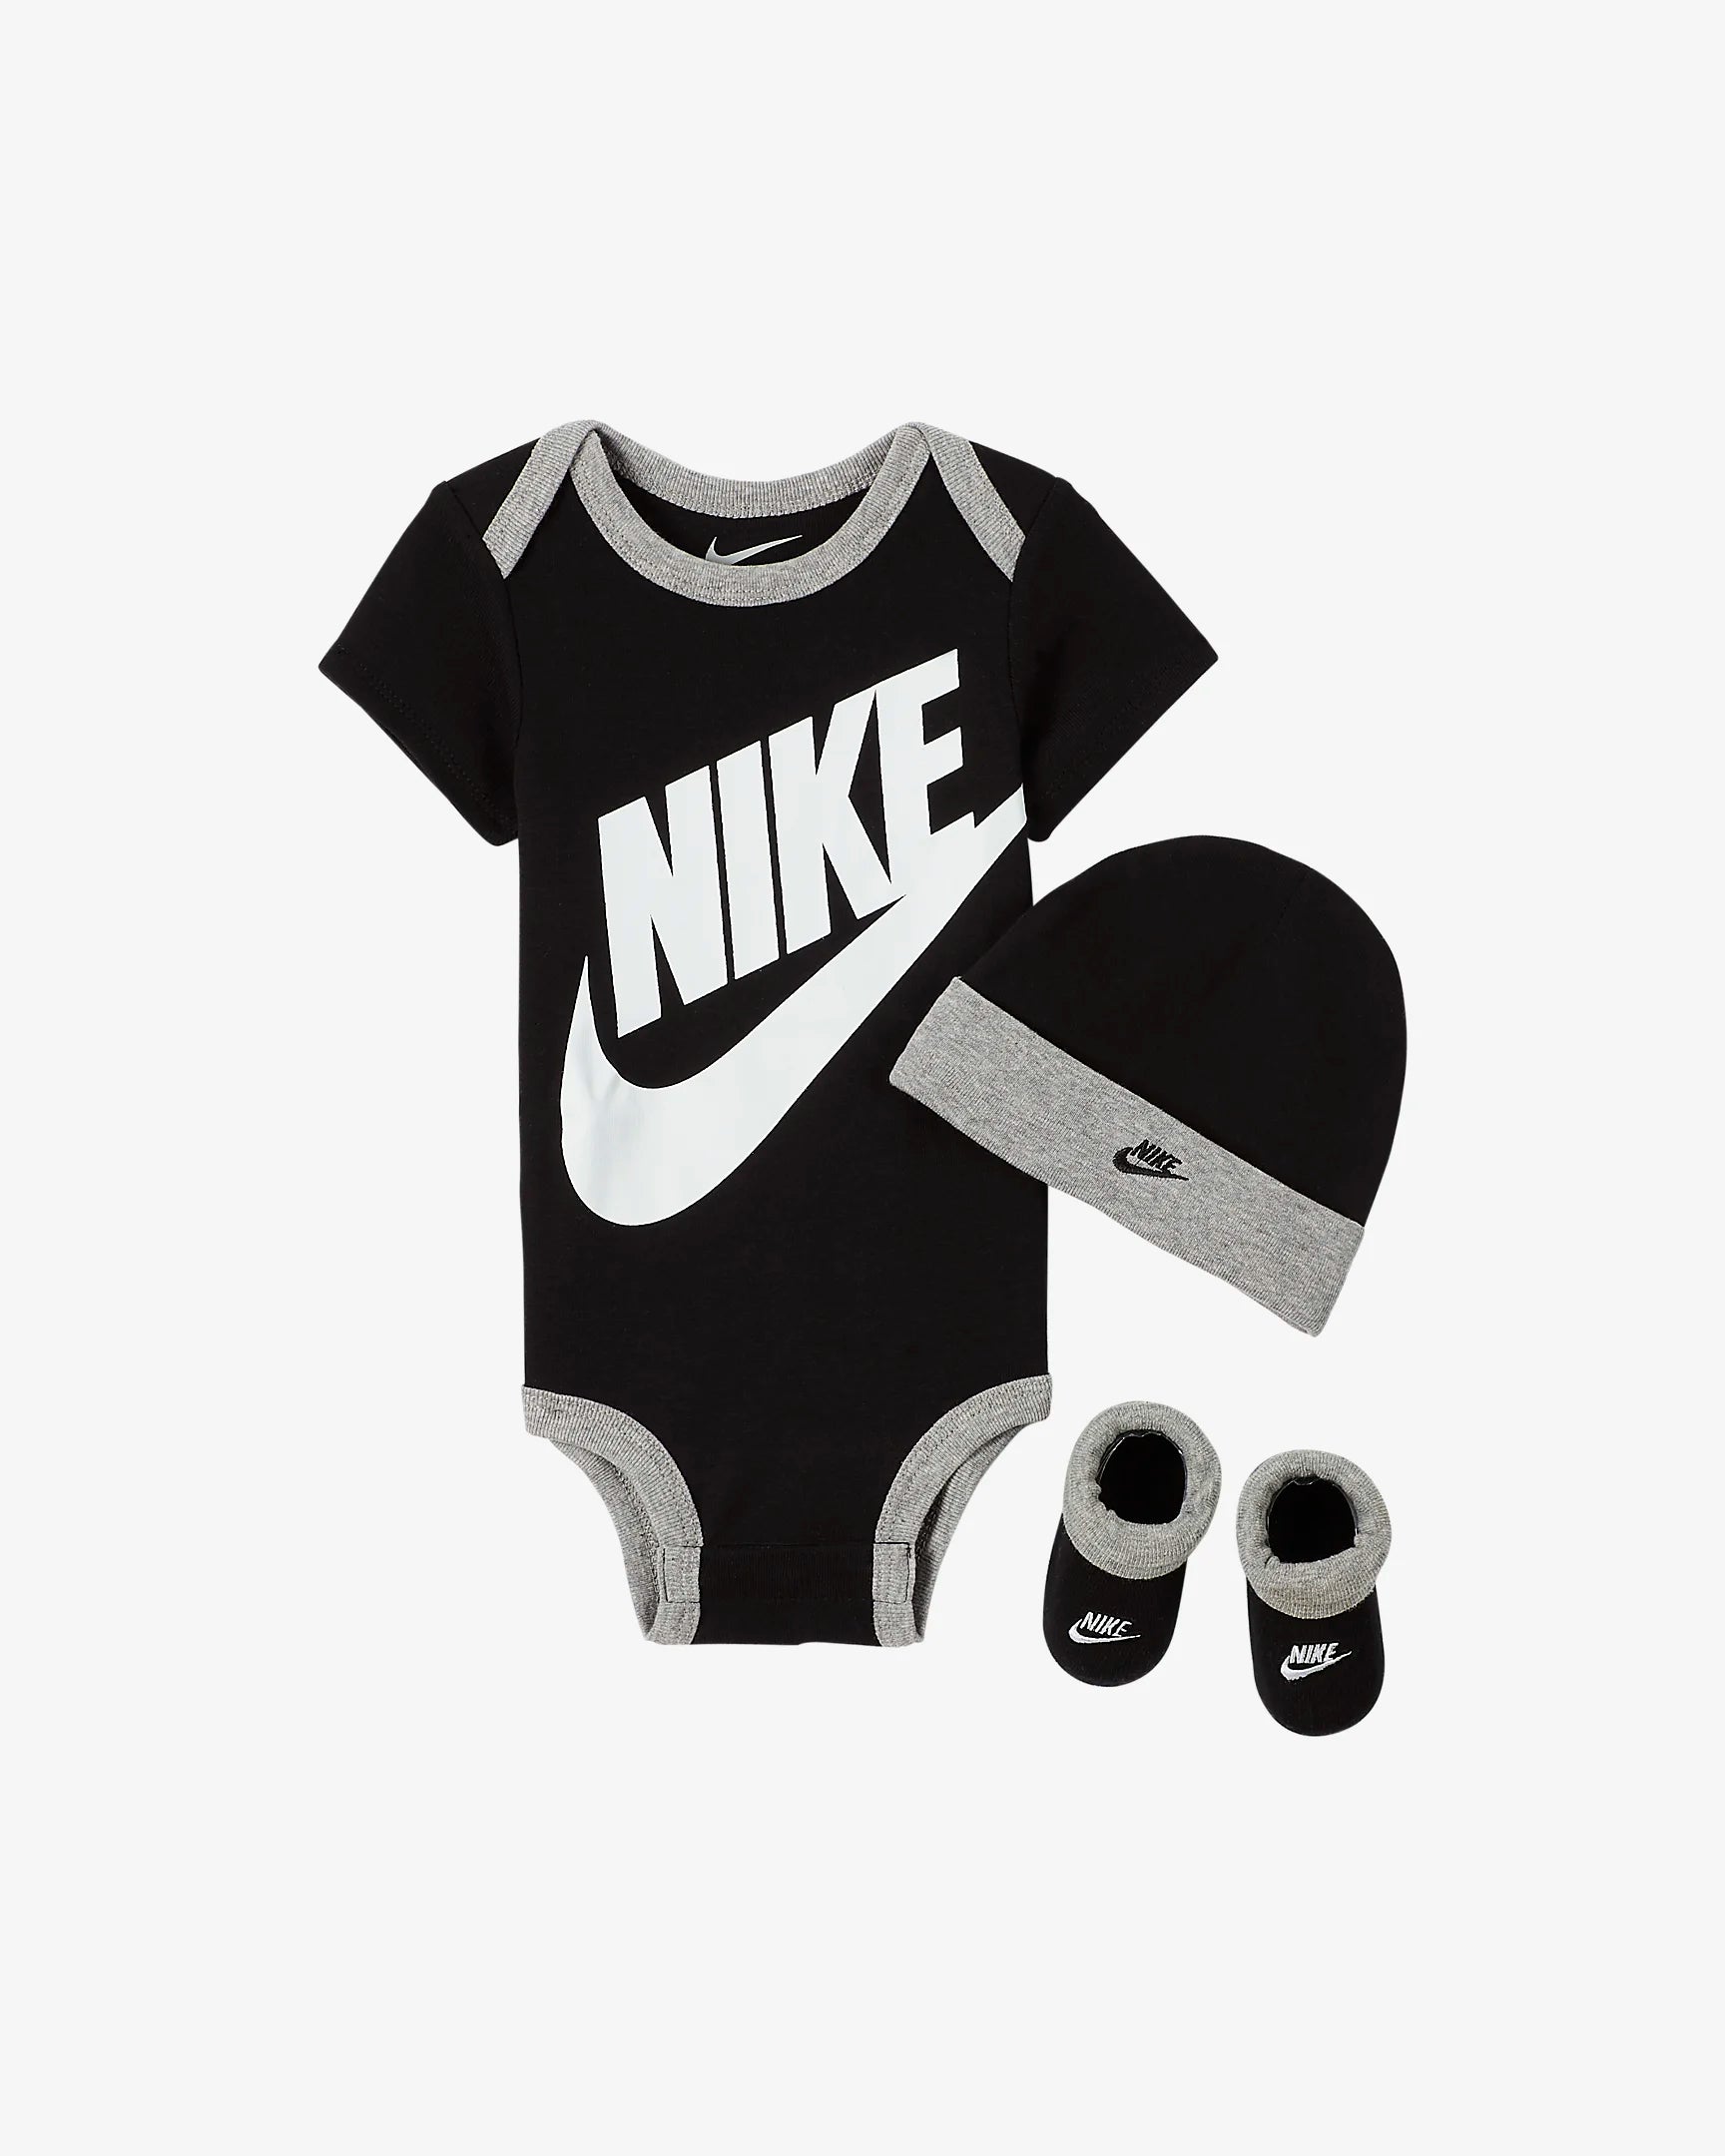 Nike Baby Set - White/Black/Grey